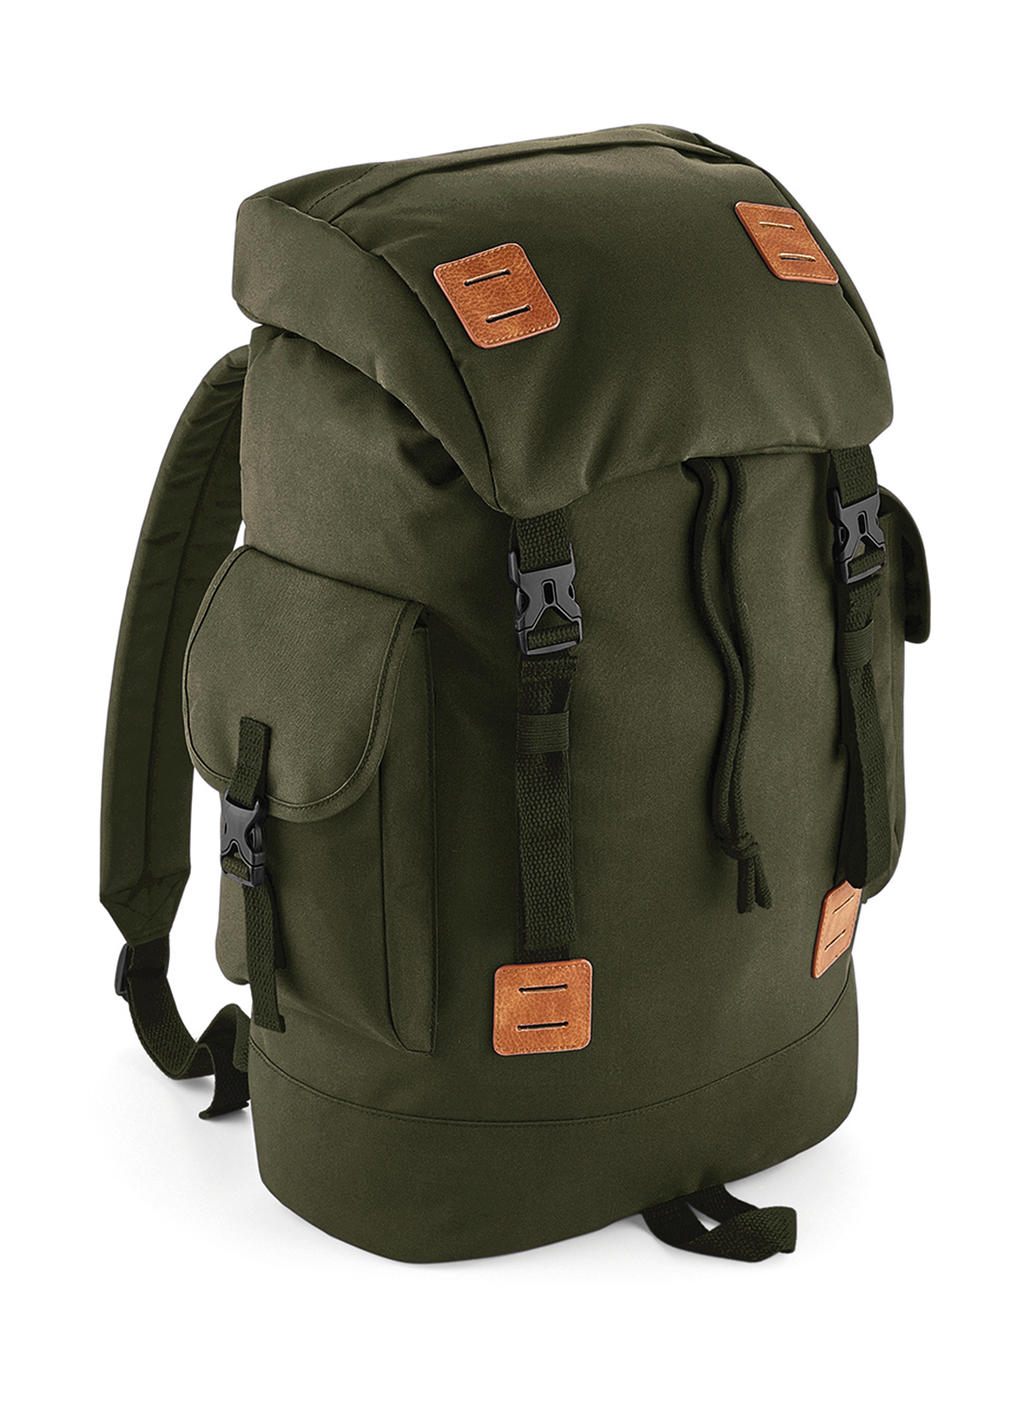  Urban Explorer Backpack in Farbe Military Green/Tan